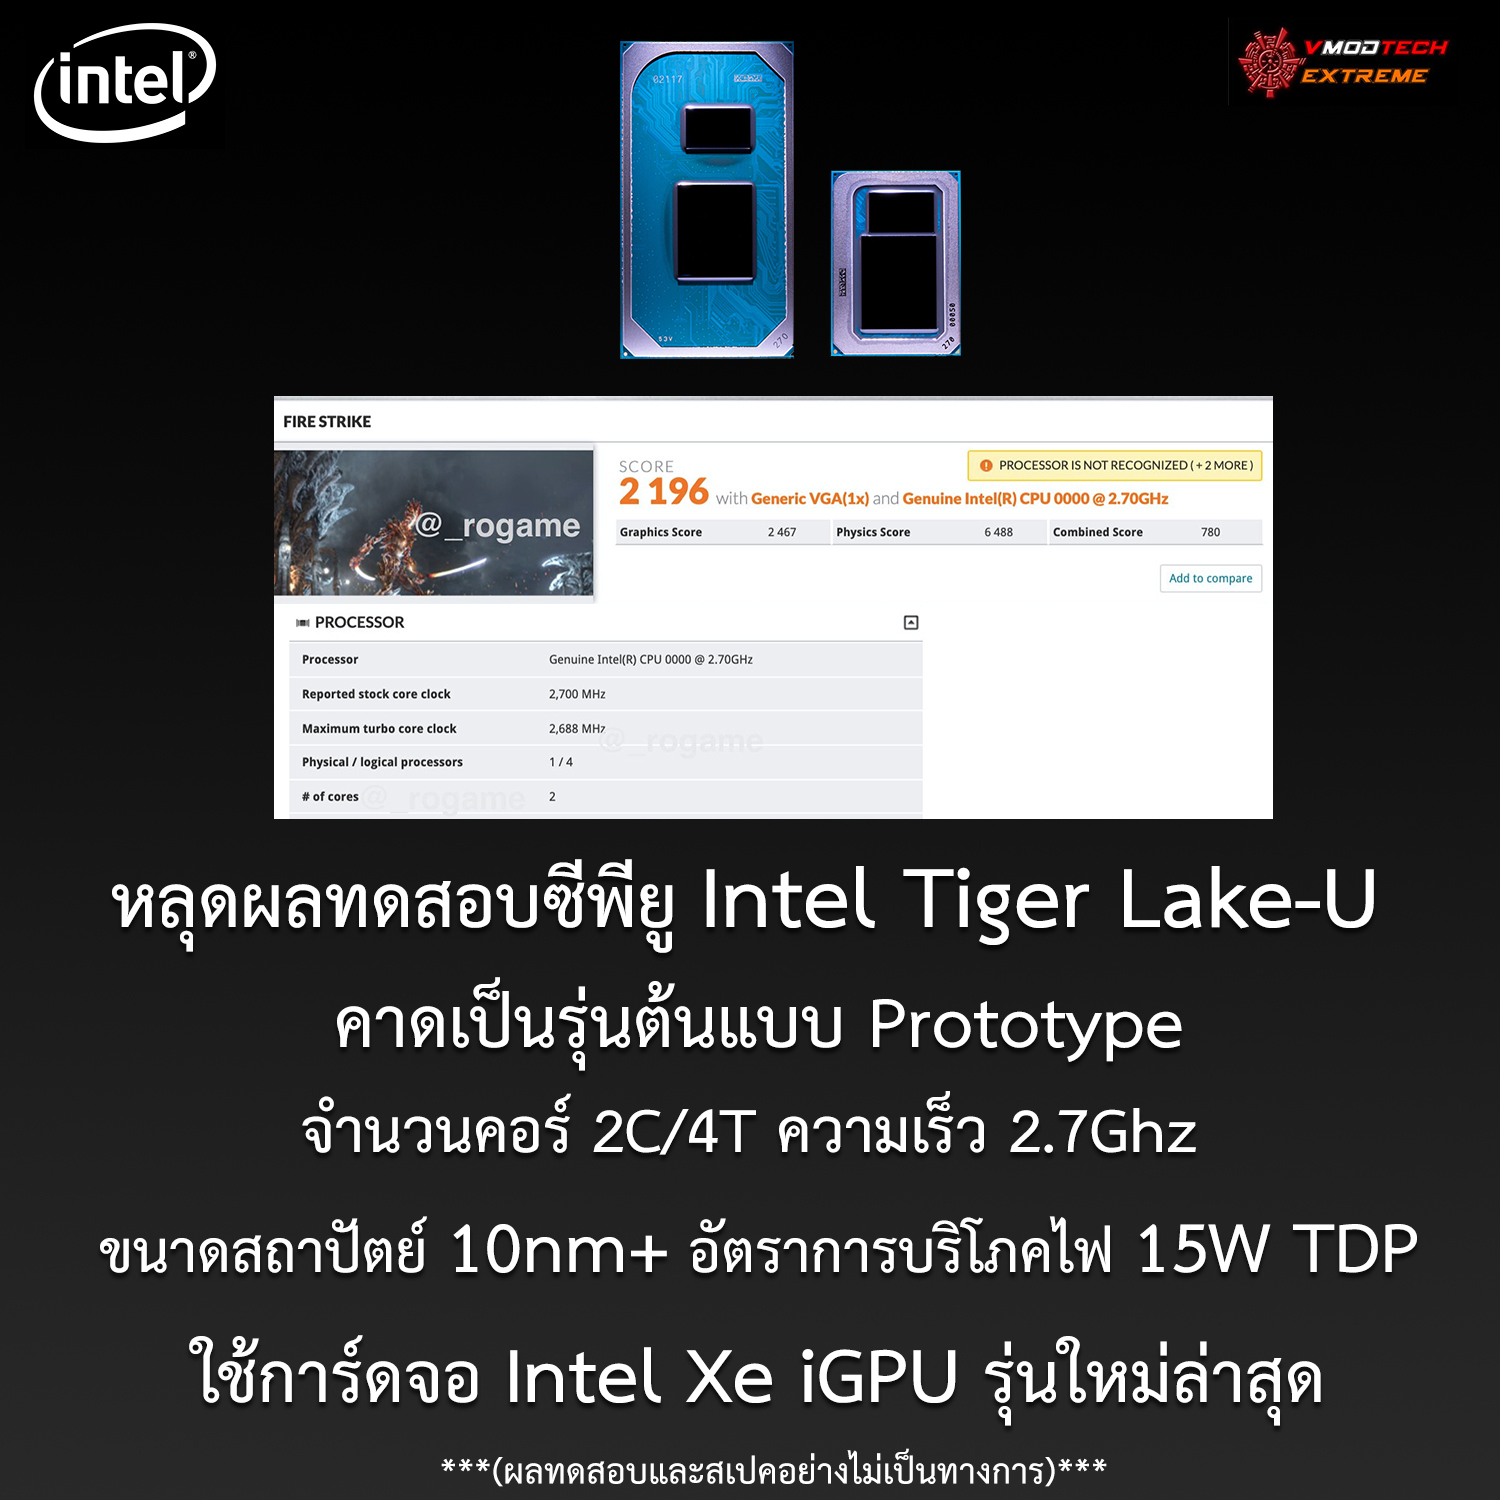 intel tiger lake u intel xe 2021 หลุดผลทดสอบที่คาดว่าเป็นซีพียู Intel Tiger Lake U รุ่นต้นแบบ Prototype ใช้การ์ดจอ Intel Xe iGPU รุ่นใหม่ล่าสุดในรุ่นที่12 คาดเปิดตัวปี 2021 อย่างไม่เป็นทางการ 